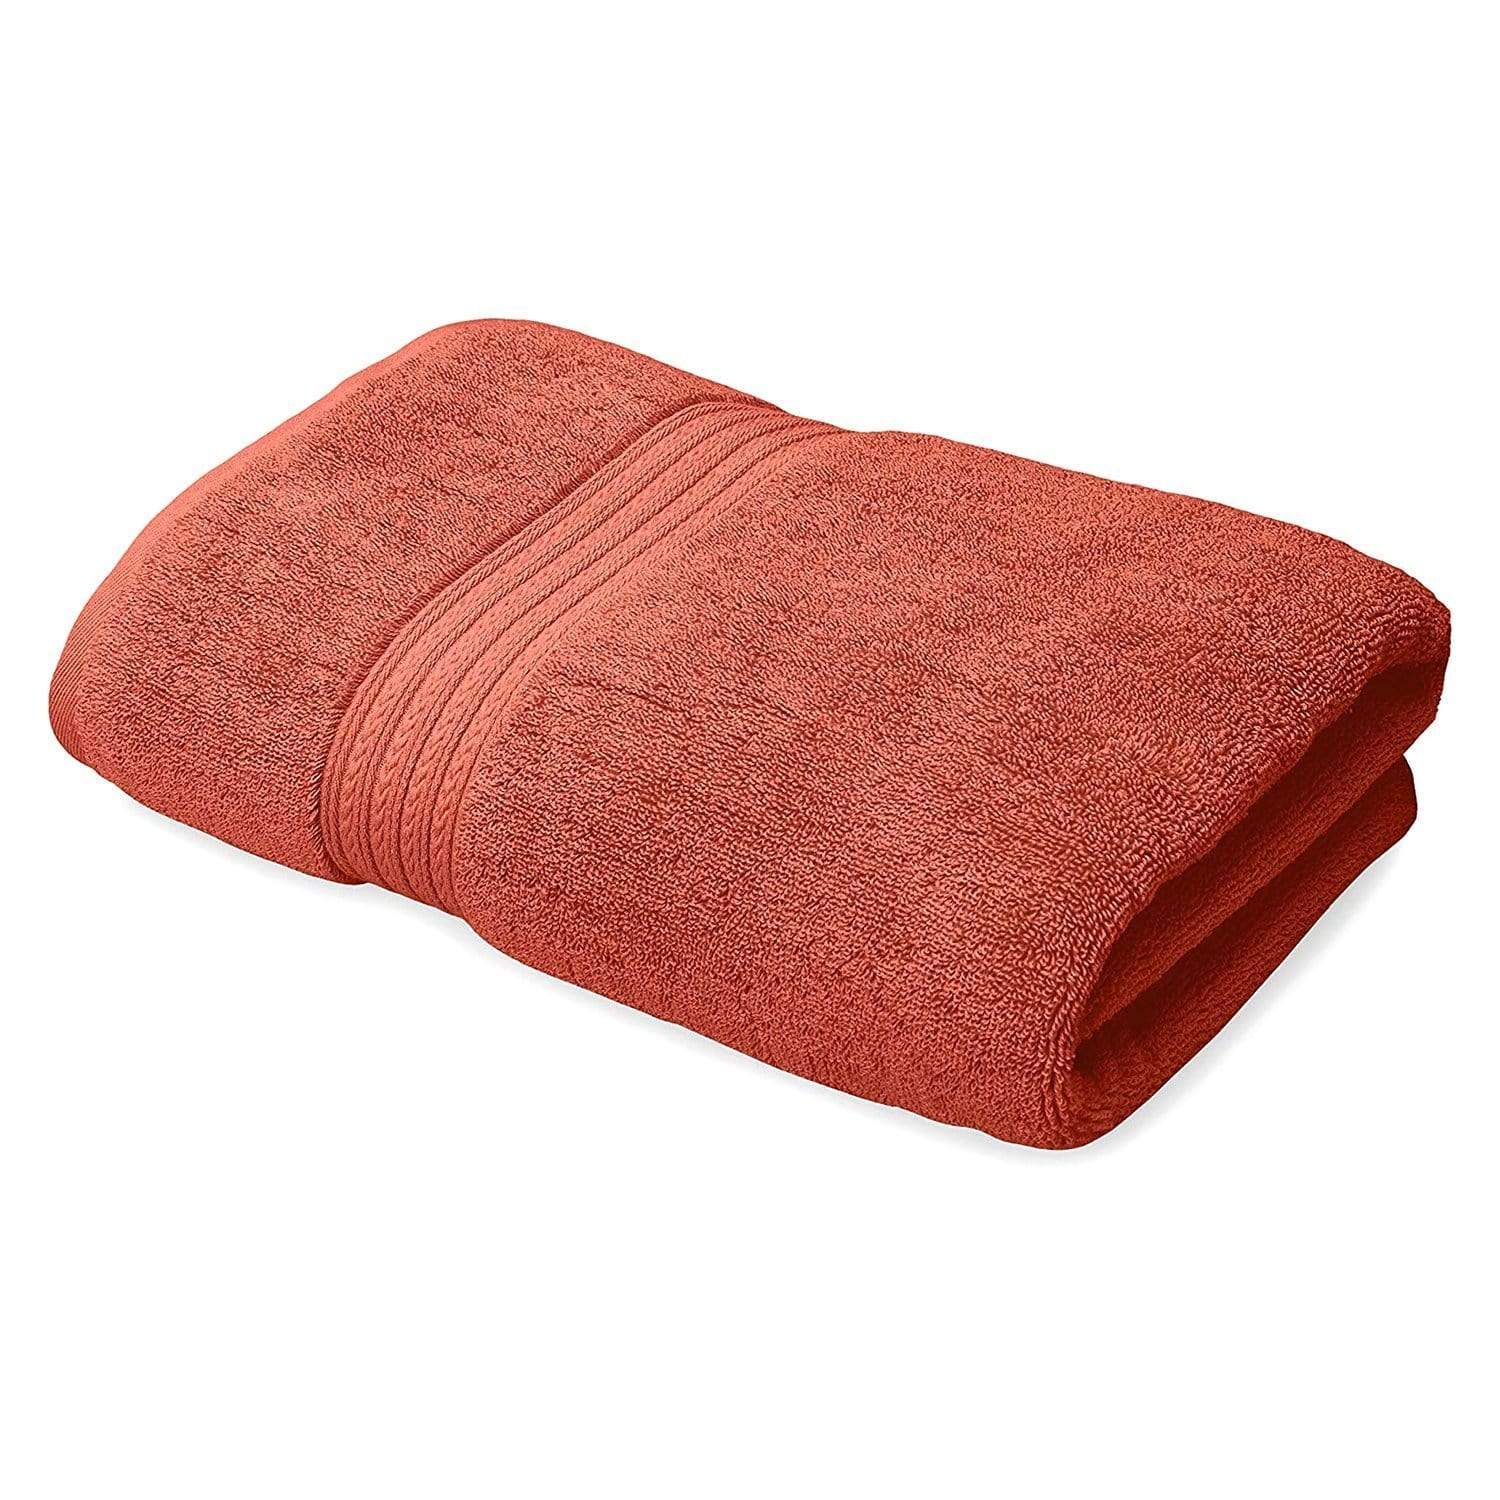 Kassatex Kassadesign Bath Towel - Blood Orange - KDK-109-BDO - Jashanmal Home